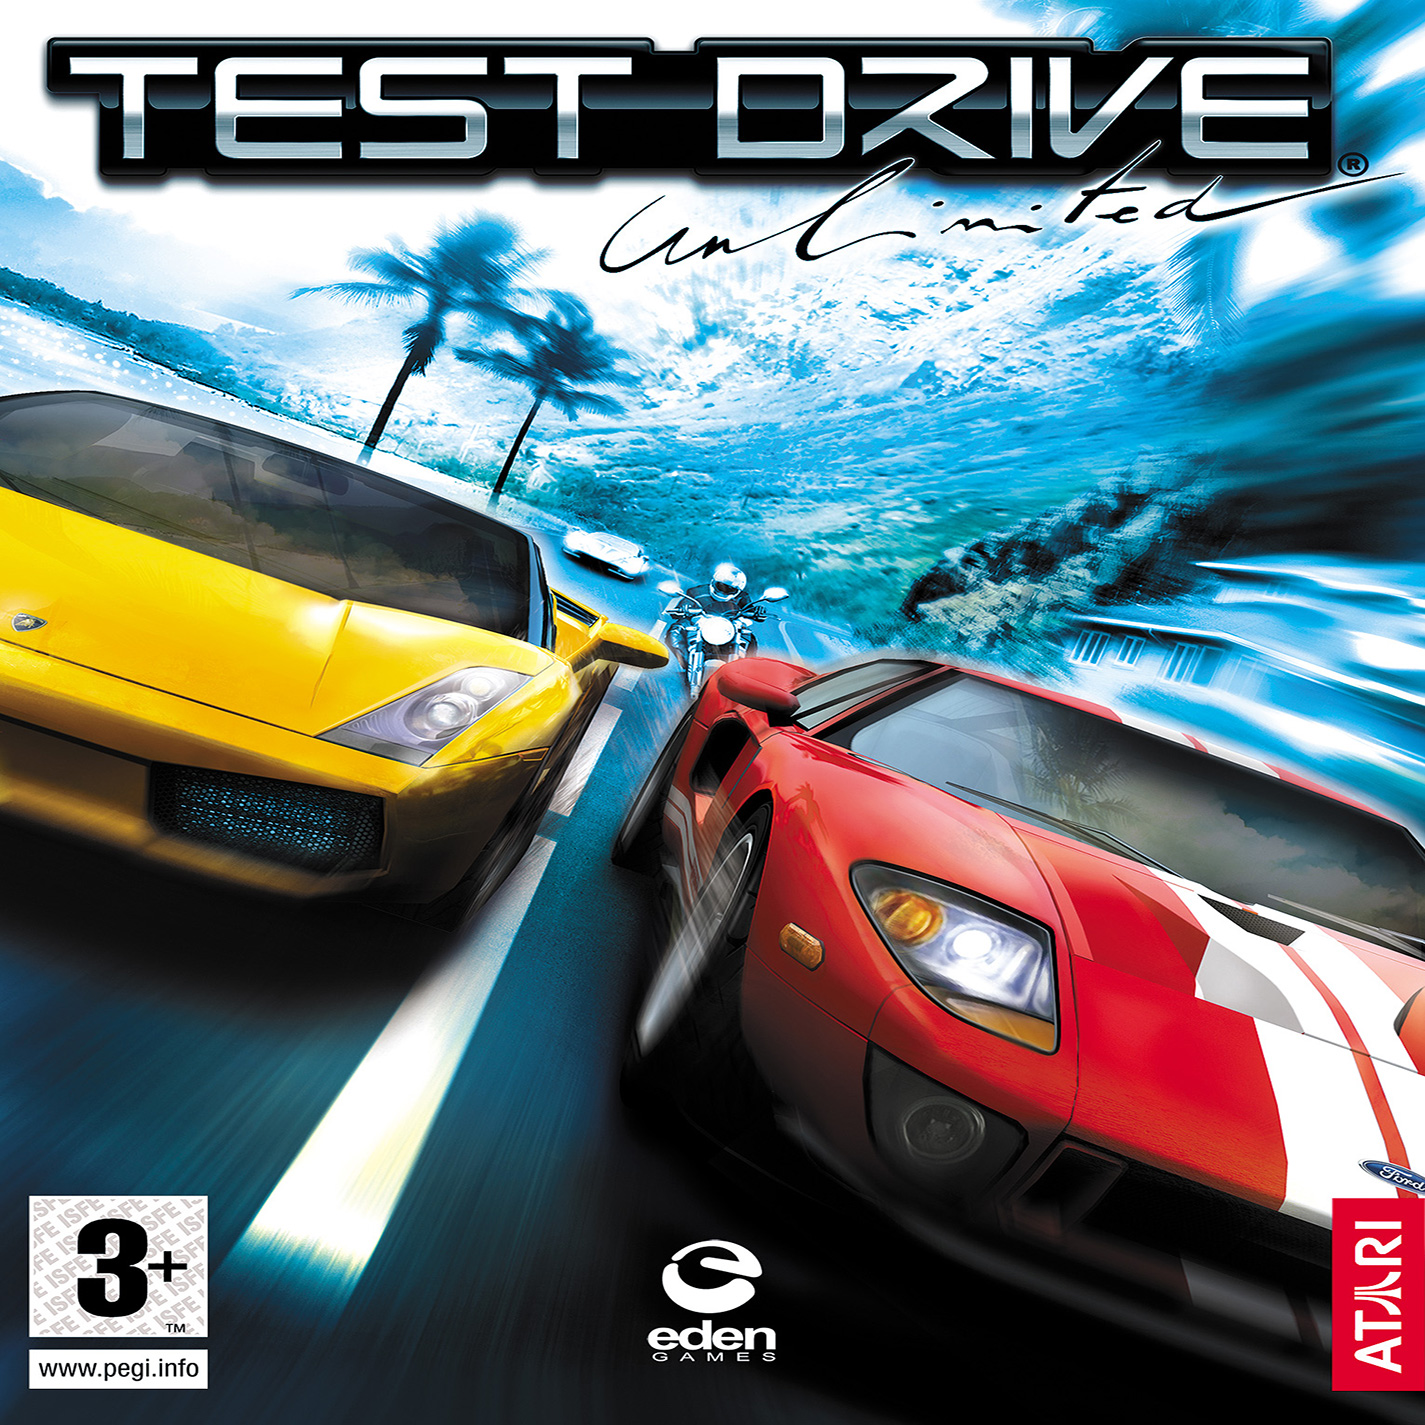 Тесты драйвы 2016. Test Drive Unlimited обложка. Test Drive Unlimited 2 обложка. Test Drive Unlimited диск. Гонки тест драйв Анлимитед 1.